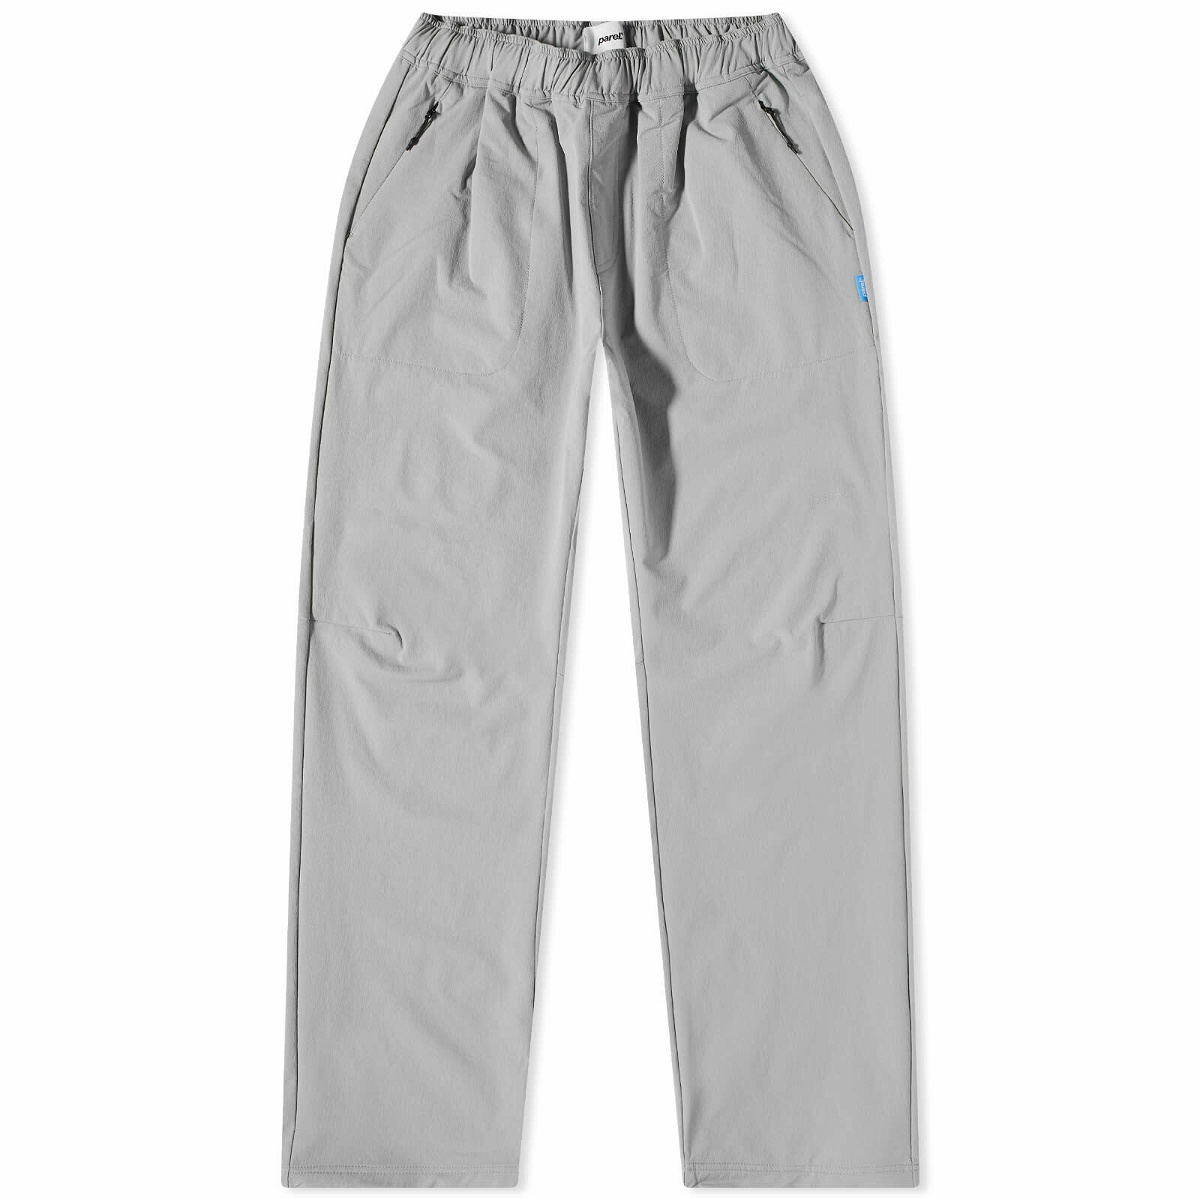 Parel Studios Men's Legan Pants in Light Grey Parel Studios